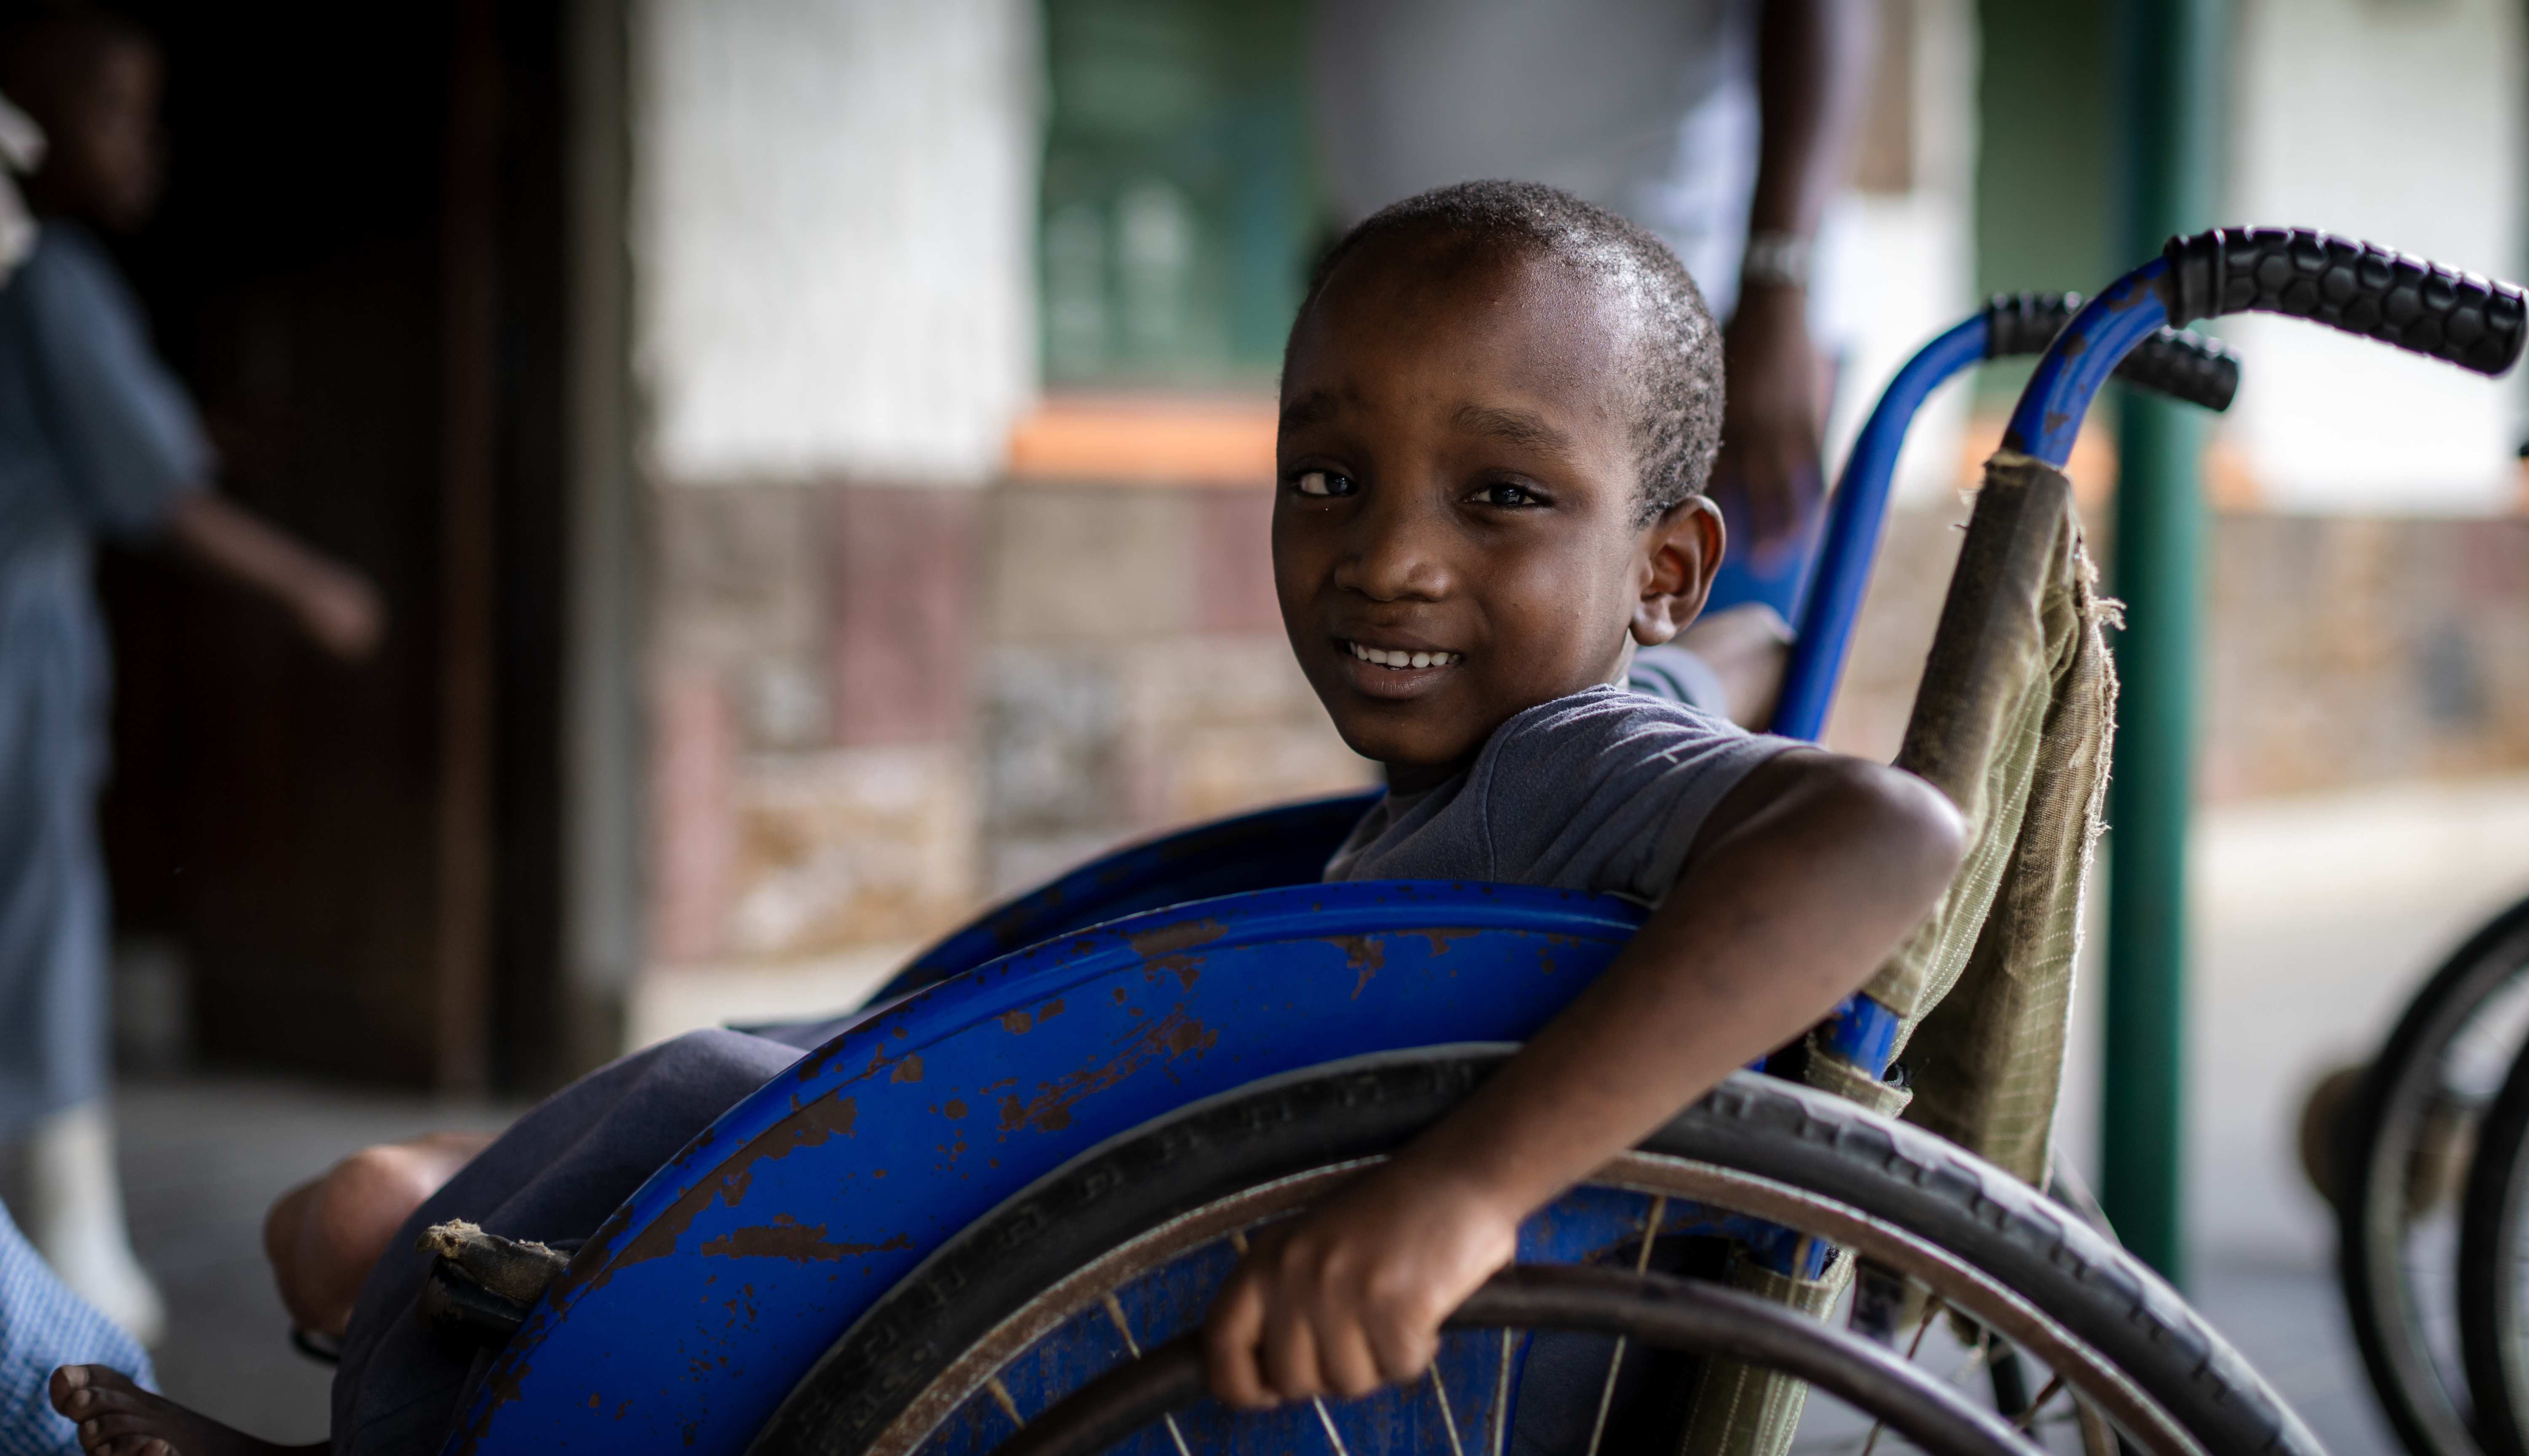 Kenianischer Bub im Rollstuhl (Foto: Kindernothilfepartner)